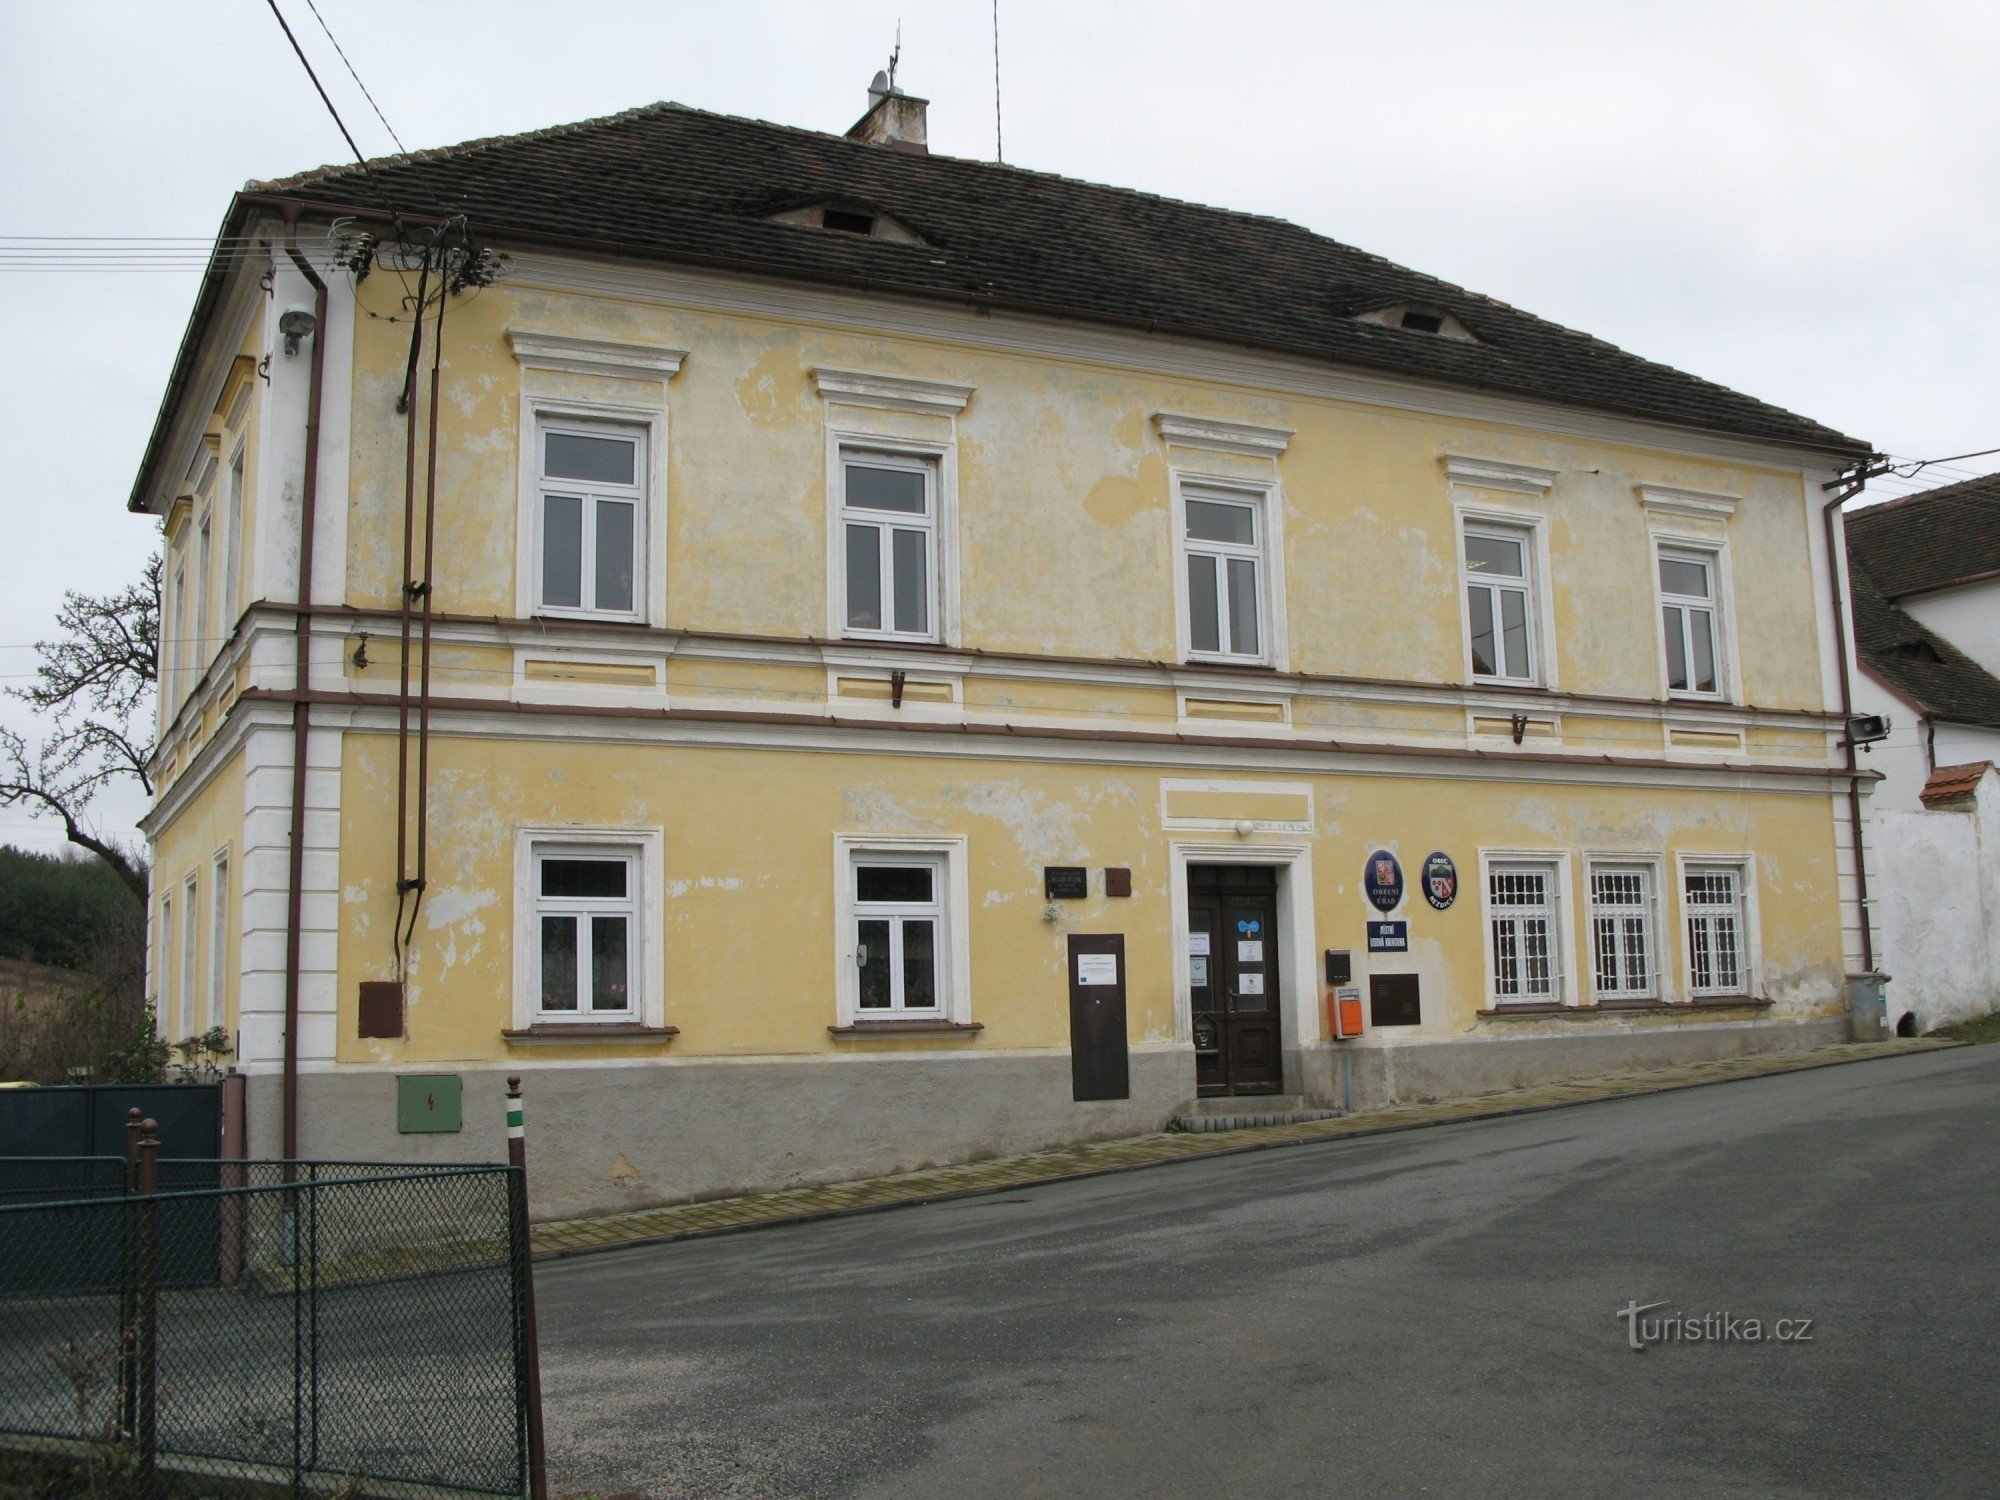 Nezdice - bureau municipal, ancienne école municipale de 1847